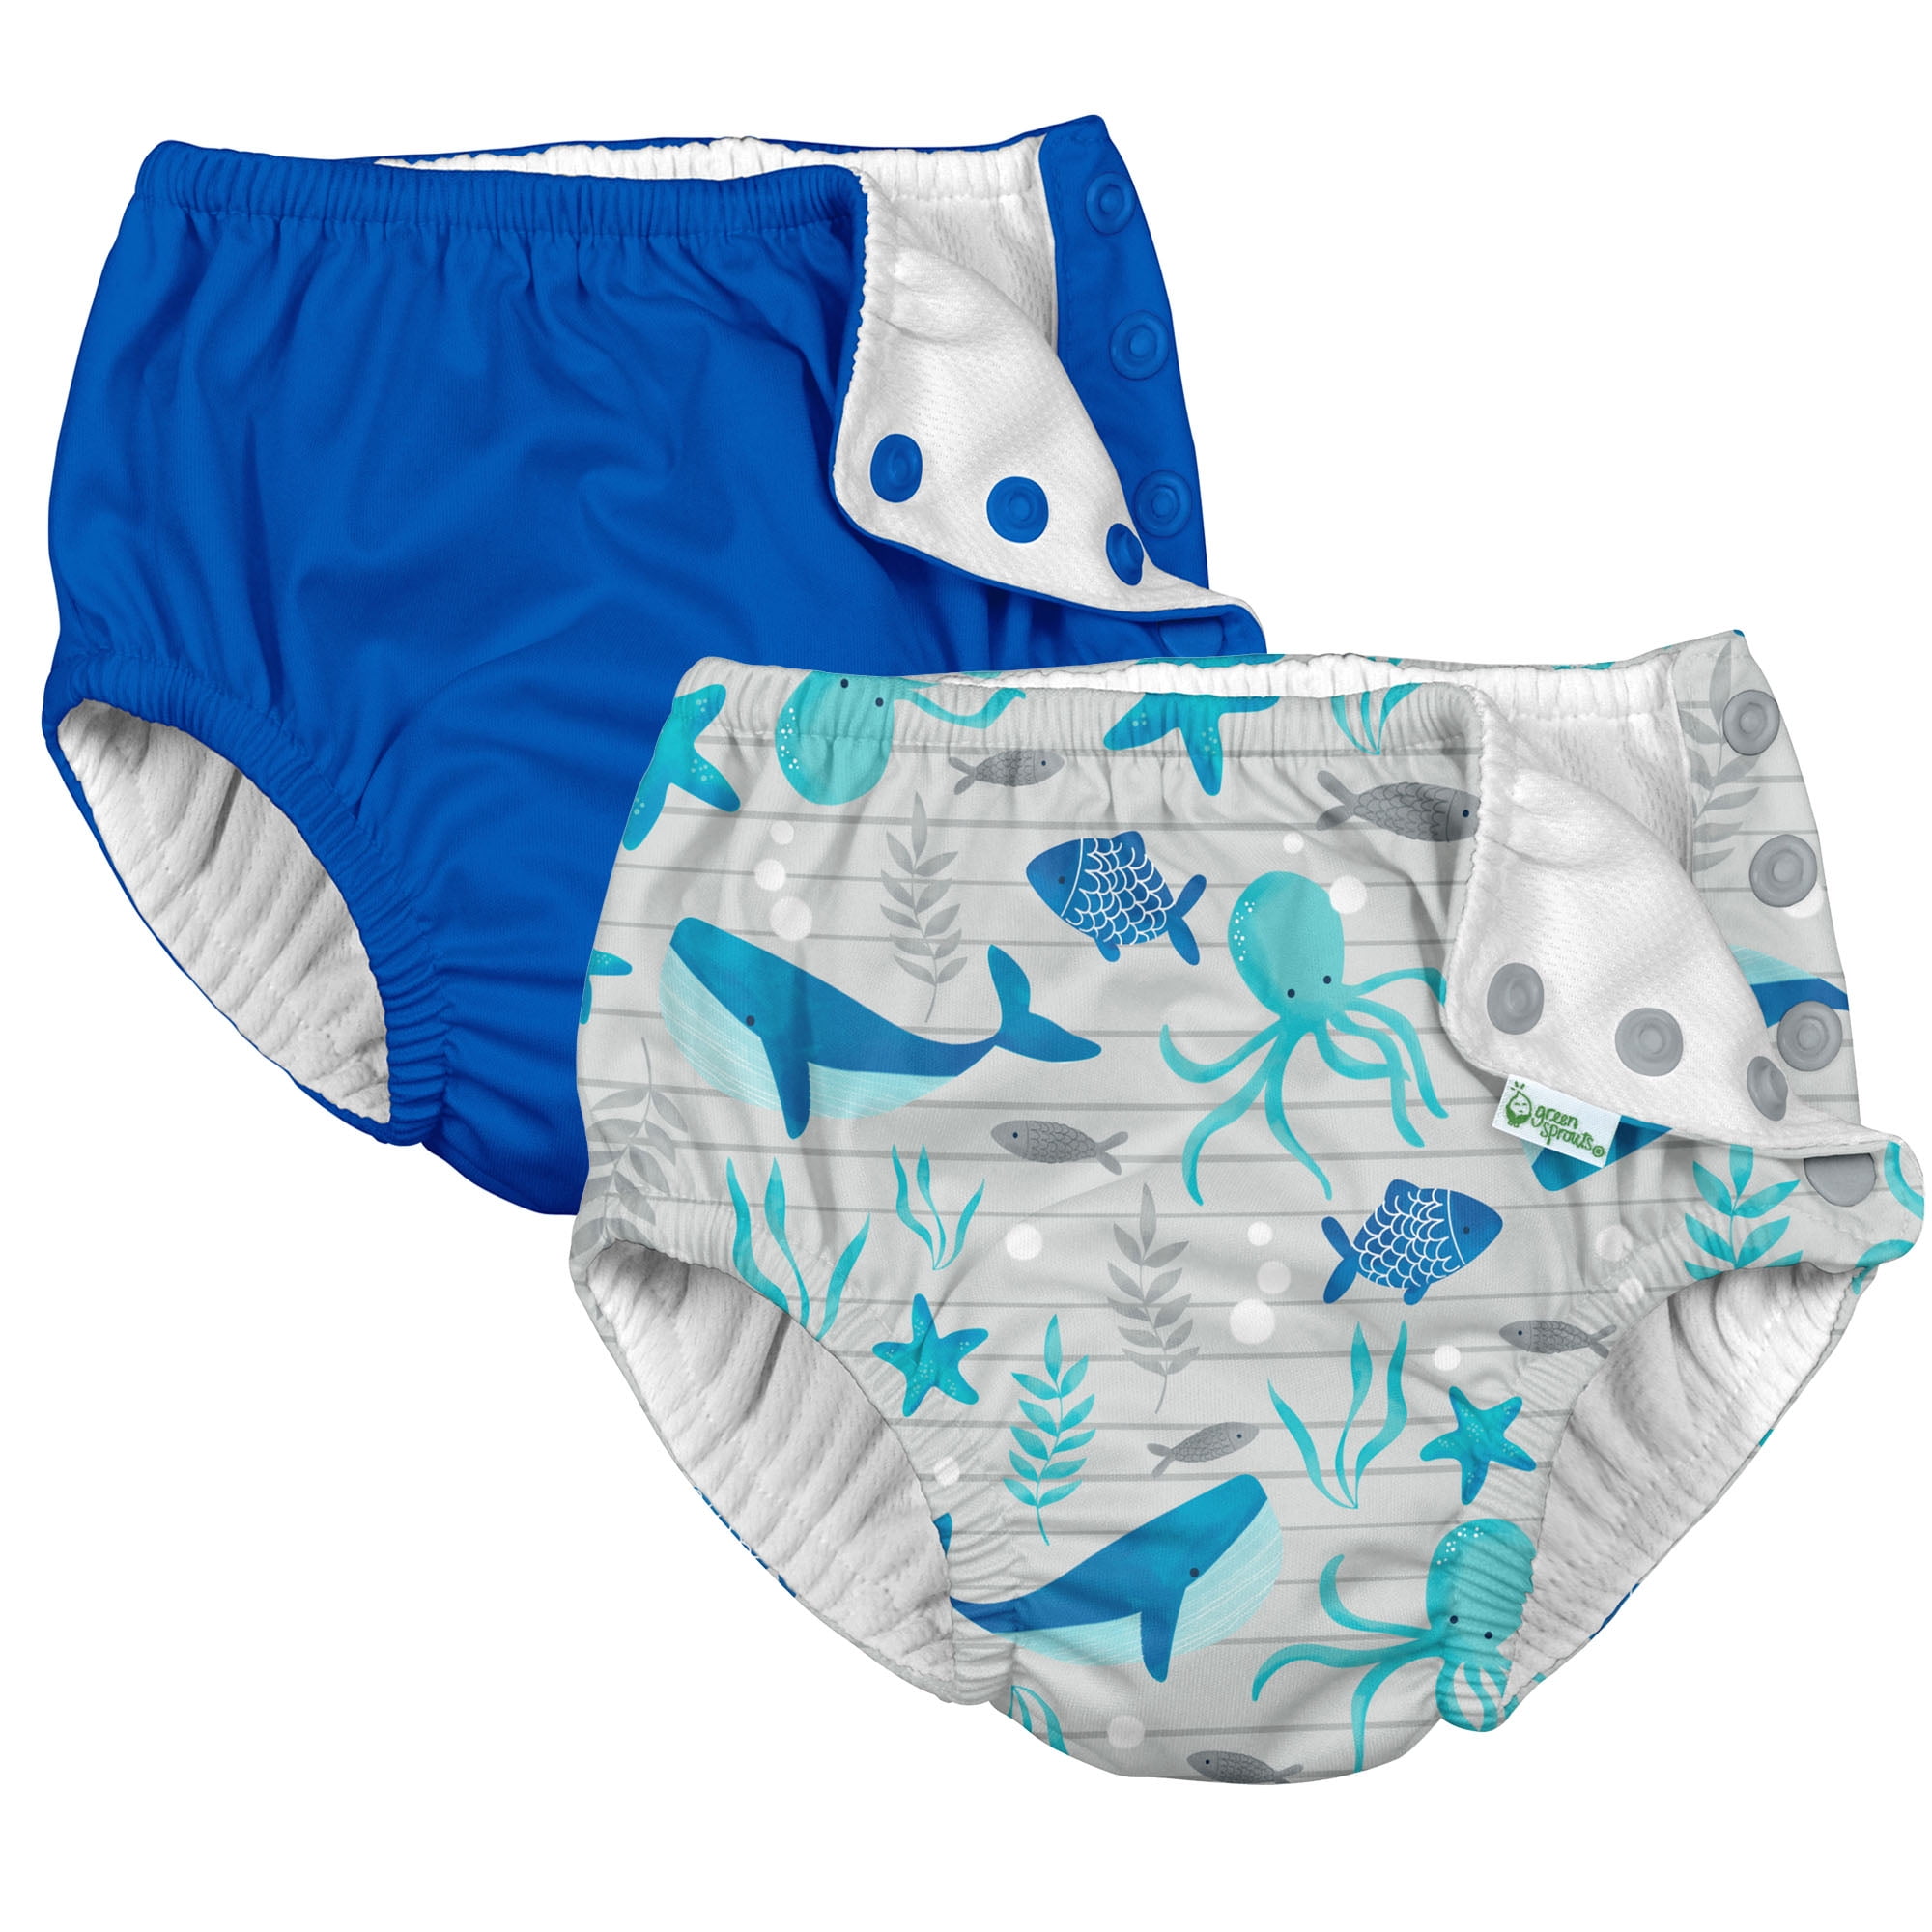 Swim School Reusable UPF 50 Girls Swim Diaper Training Pants 12 mo 